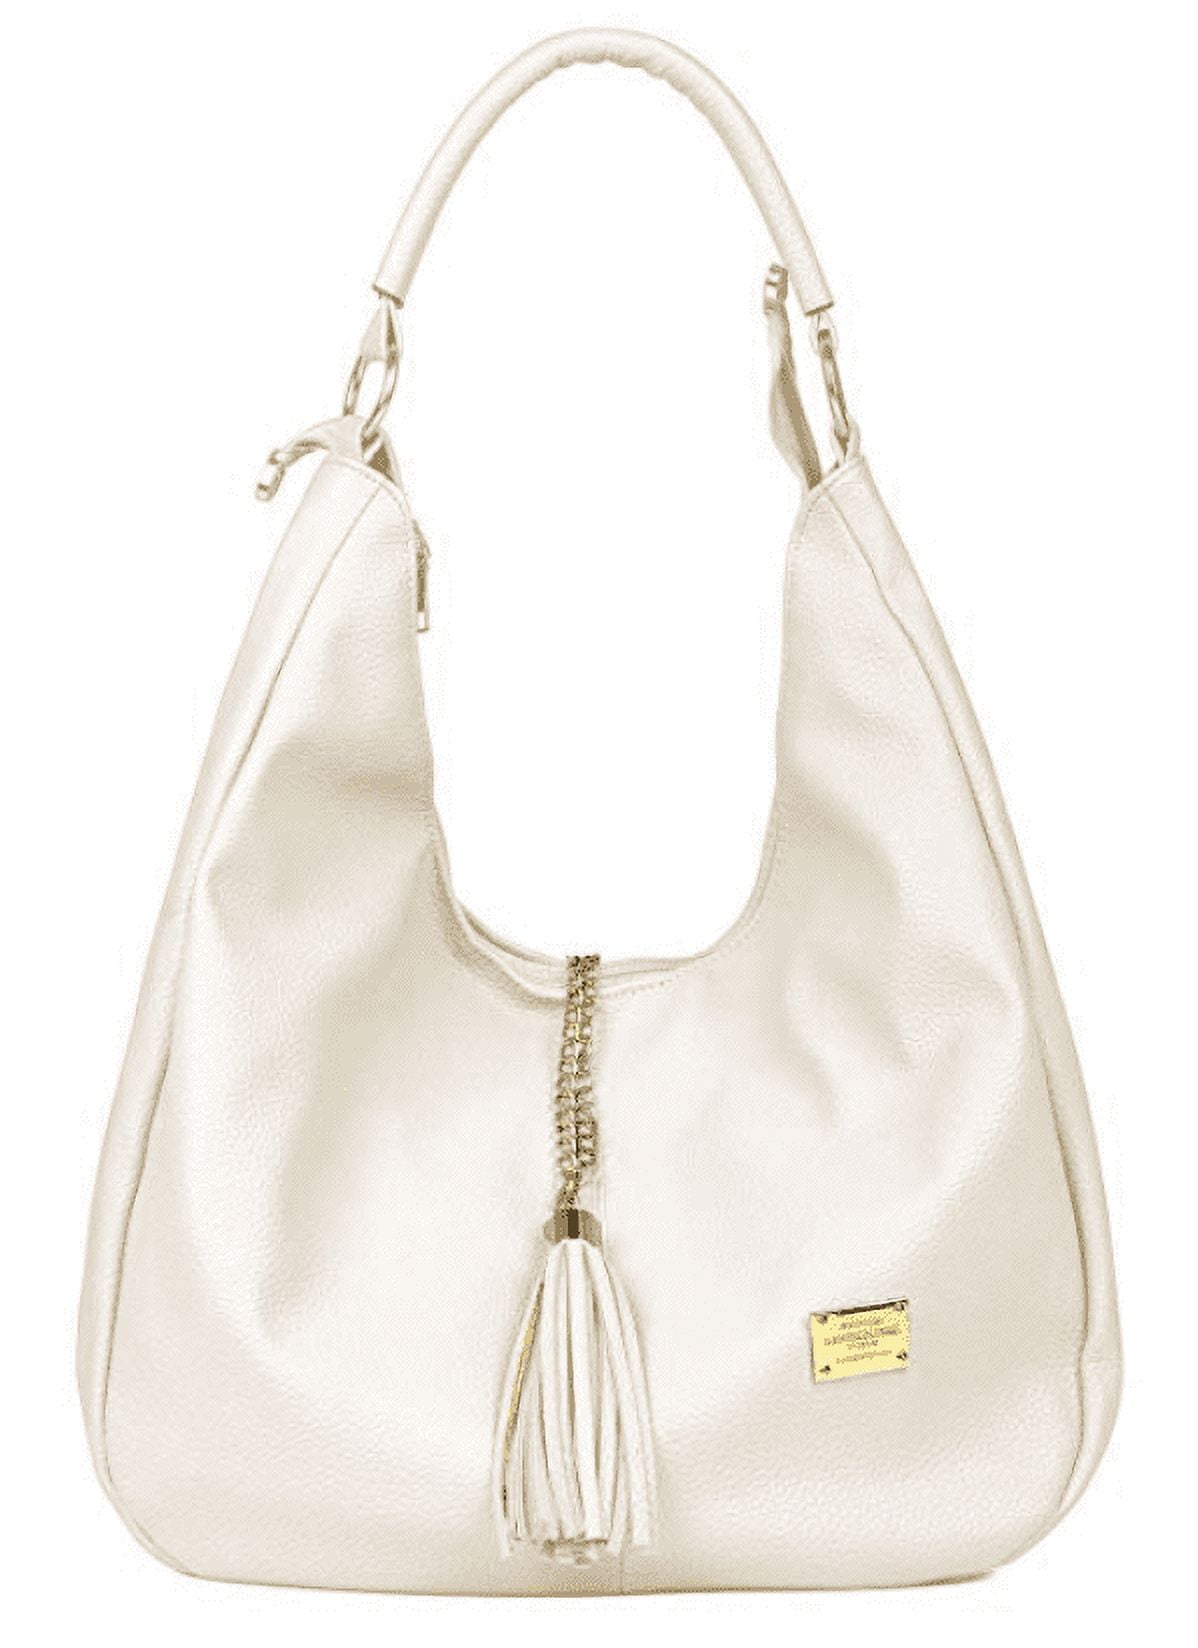 POPPY Handbags Gift Set 3 in 1 Women's Top Handle Satchel Totes Handbag  with Wallet Crossbody Shoulder Bag Ladies Purses Work Bag, Plaid Black -  Walmart.com